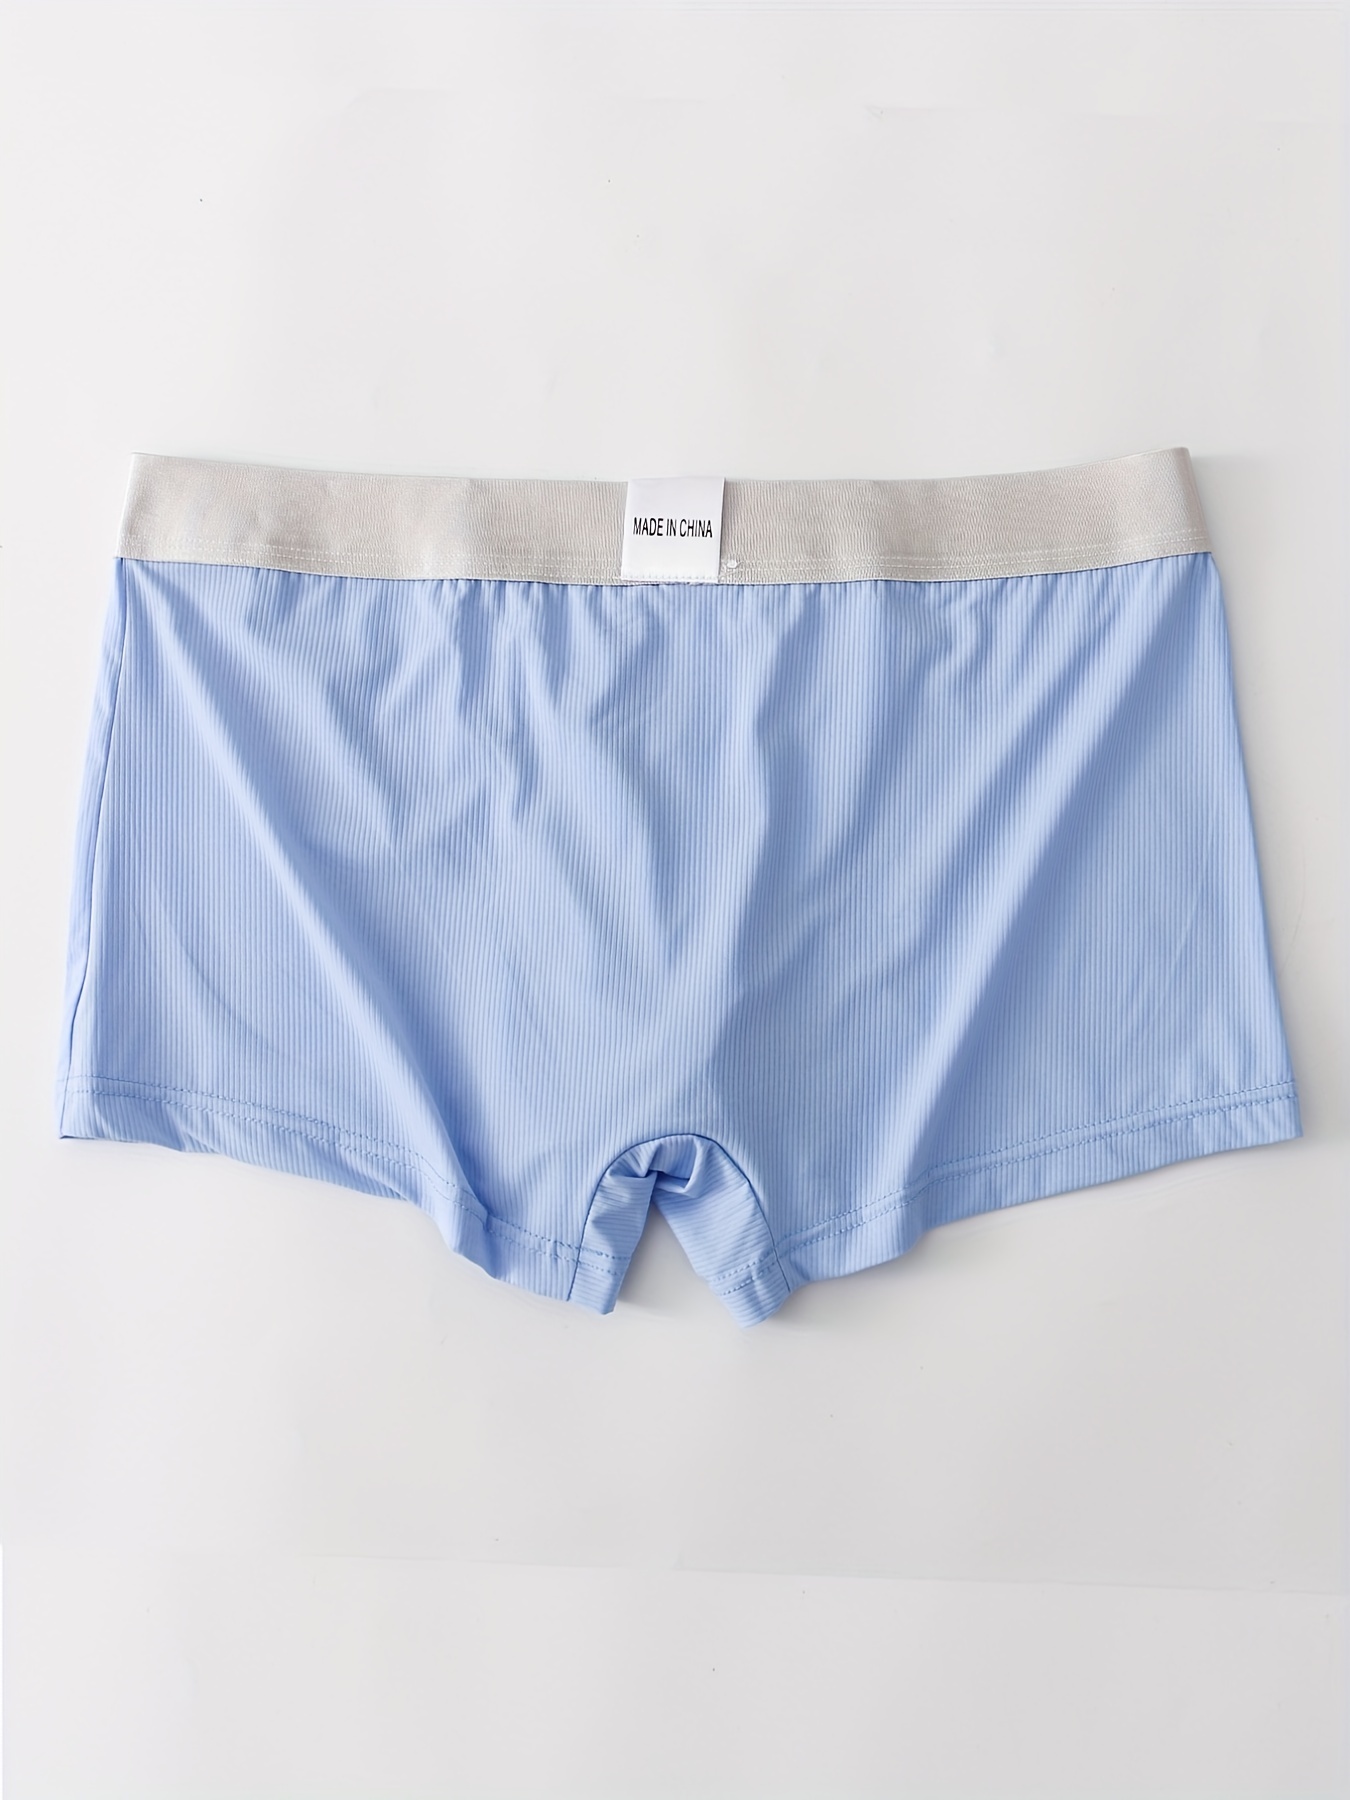 Men's Boxer Briefs Striped Elephant Trunk Underwear Thin Cotton Panties